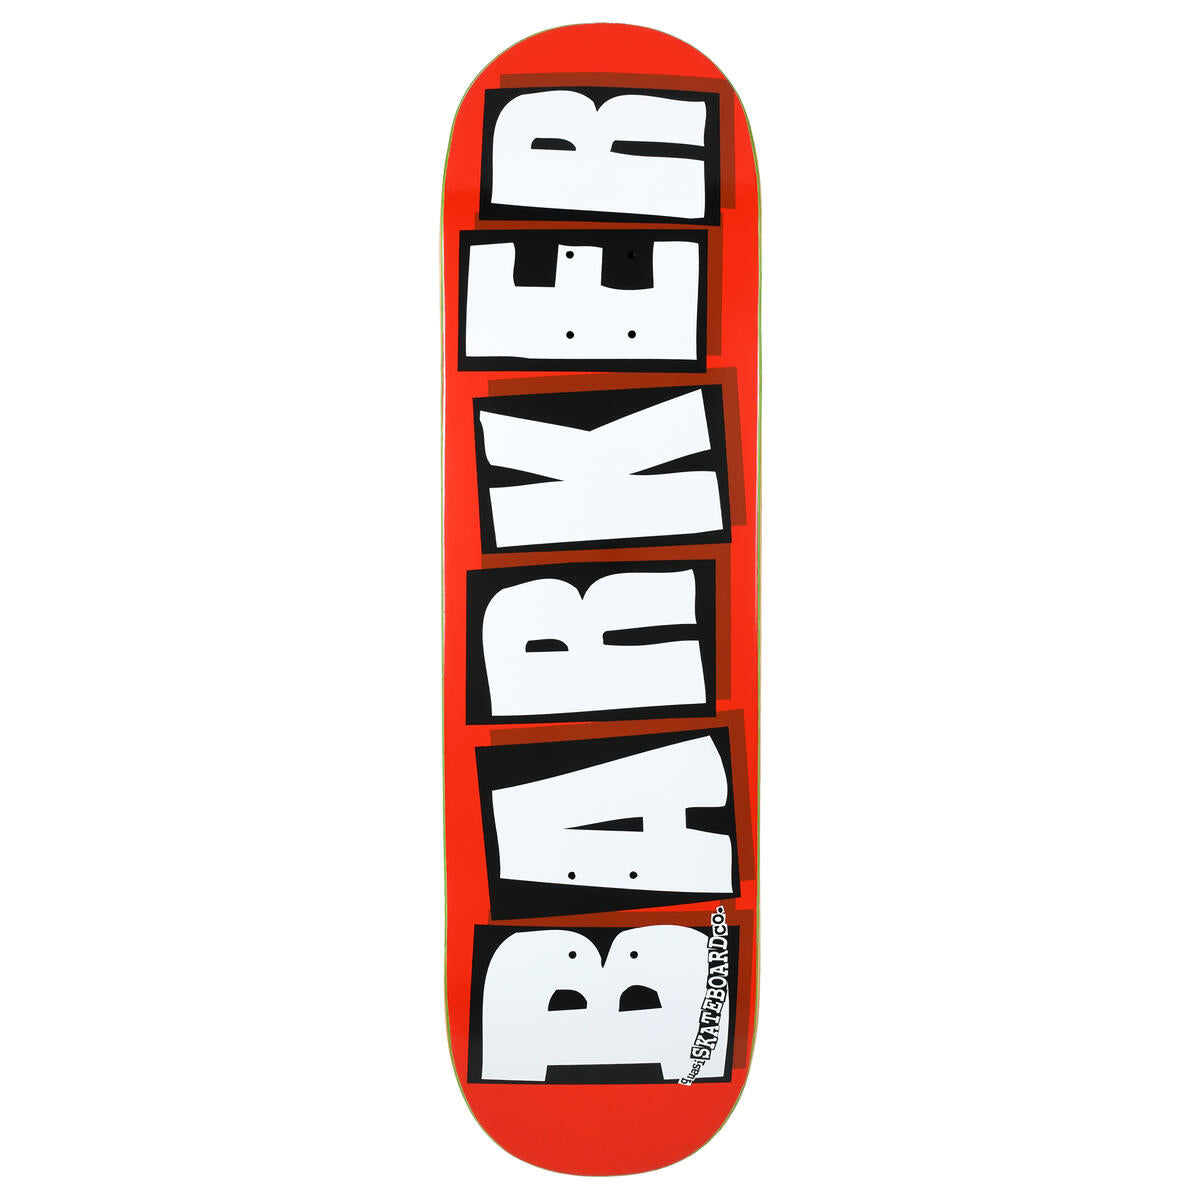 Quasi Dane Barker 3 8.5" Skateboard Deck